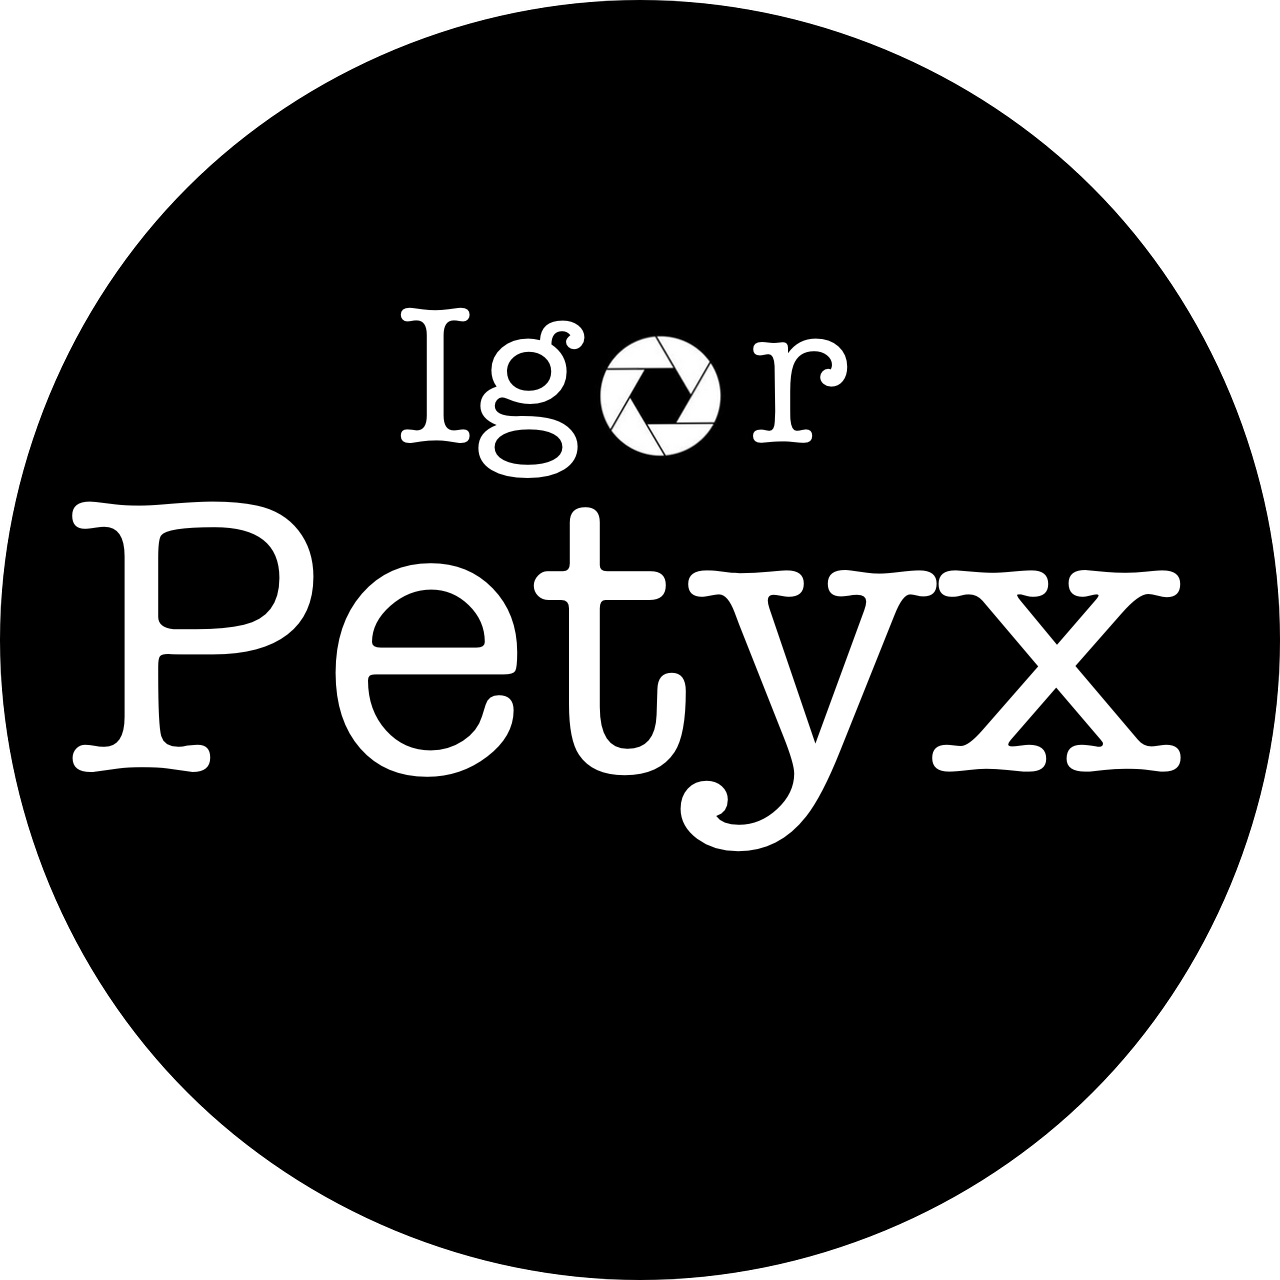 Igor Petyx